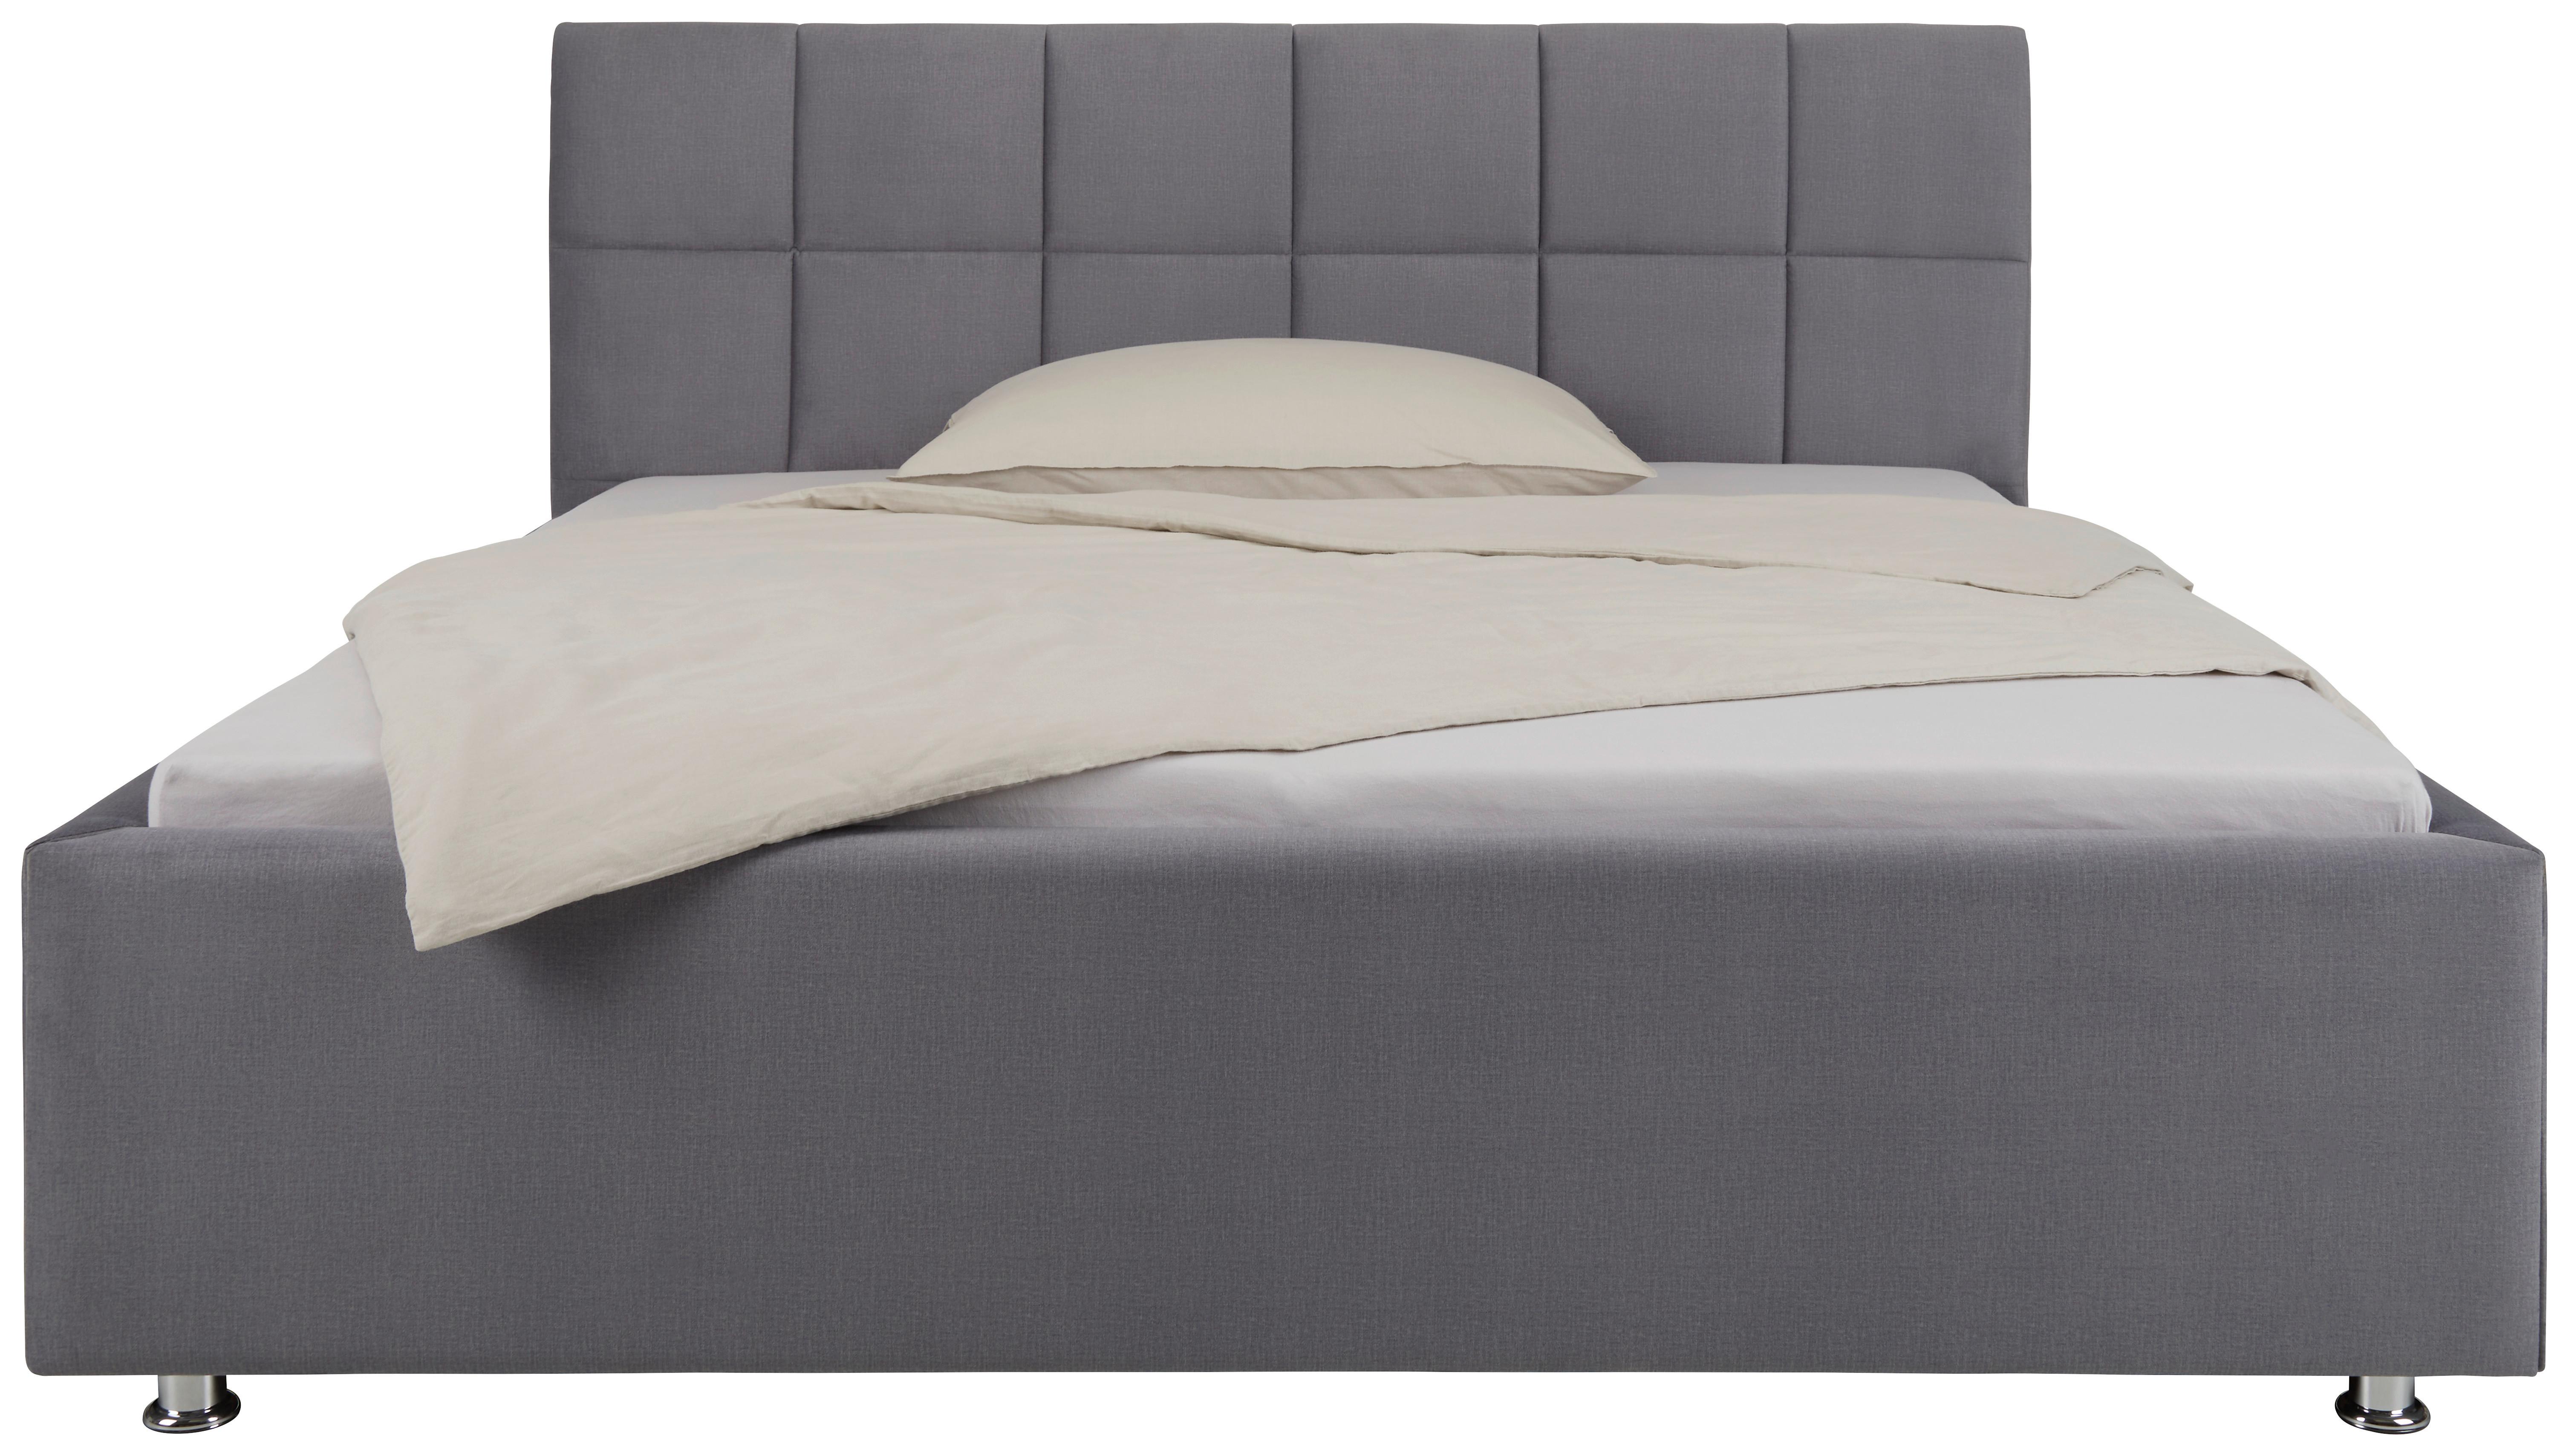 Polsterbett in Grau ca. 180x200cm - Chromfarben/Grau, Konventionell, Textil (180/200cm) - Premium Living